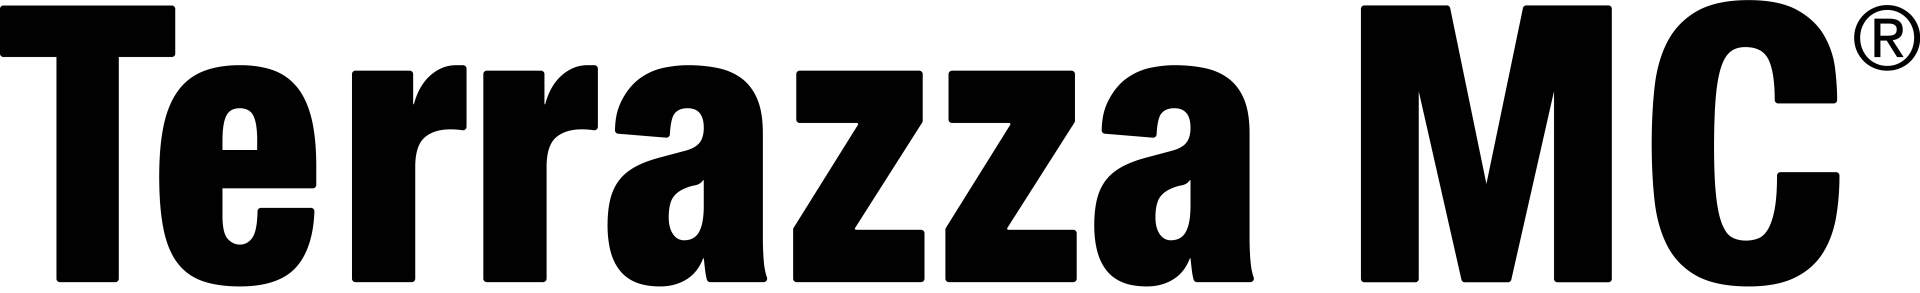 Terrazza logo letters